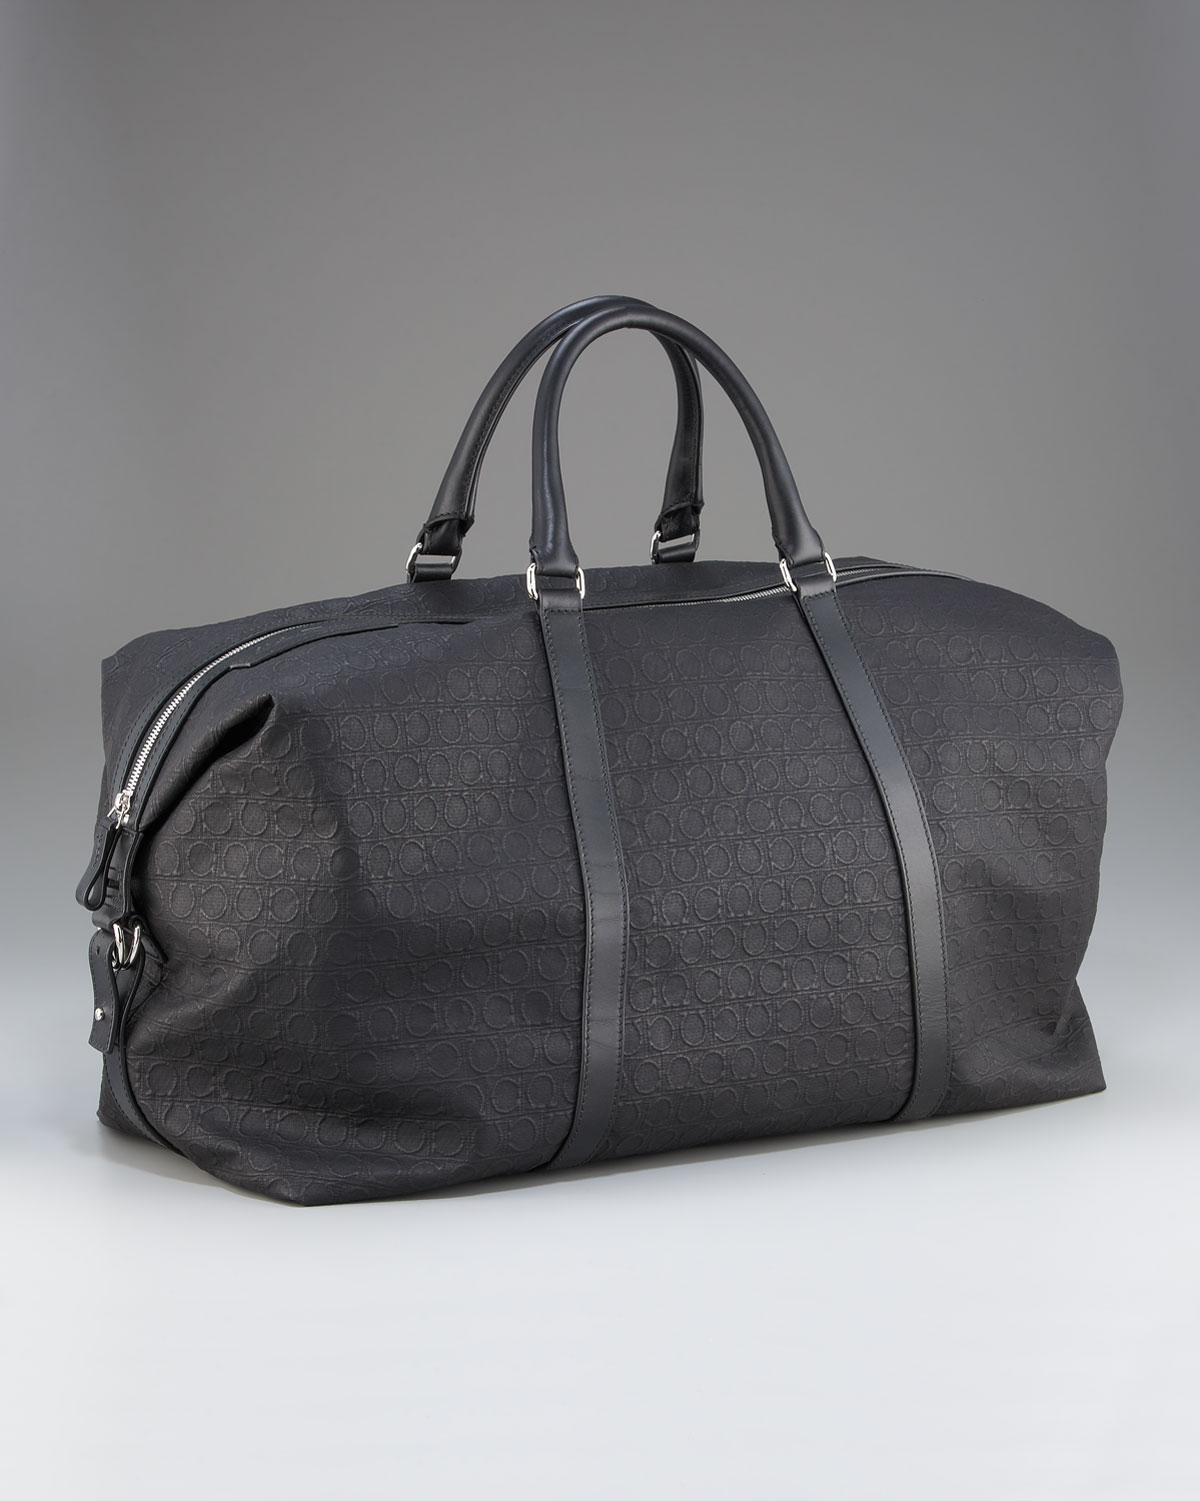 Ferragamo Miami Linen Duffel Bag in Black for Men - Lyst